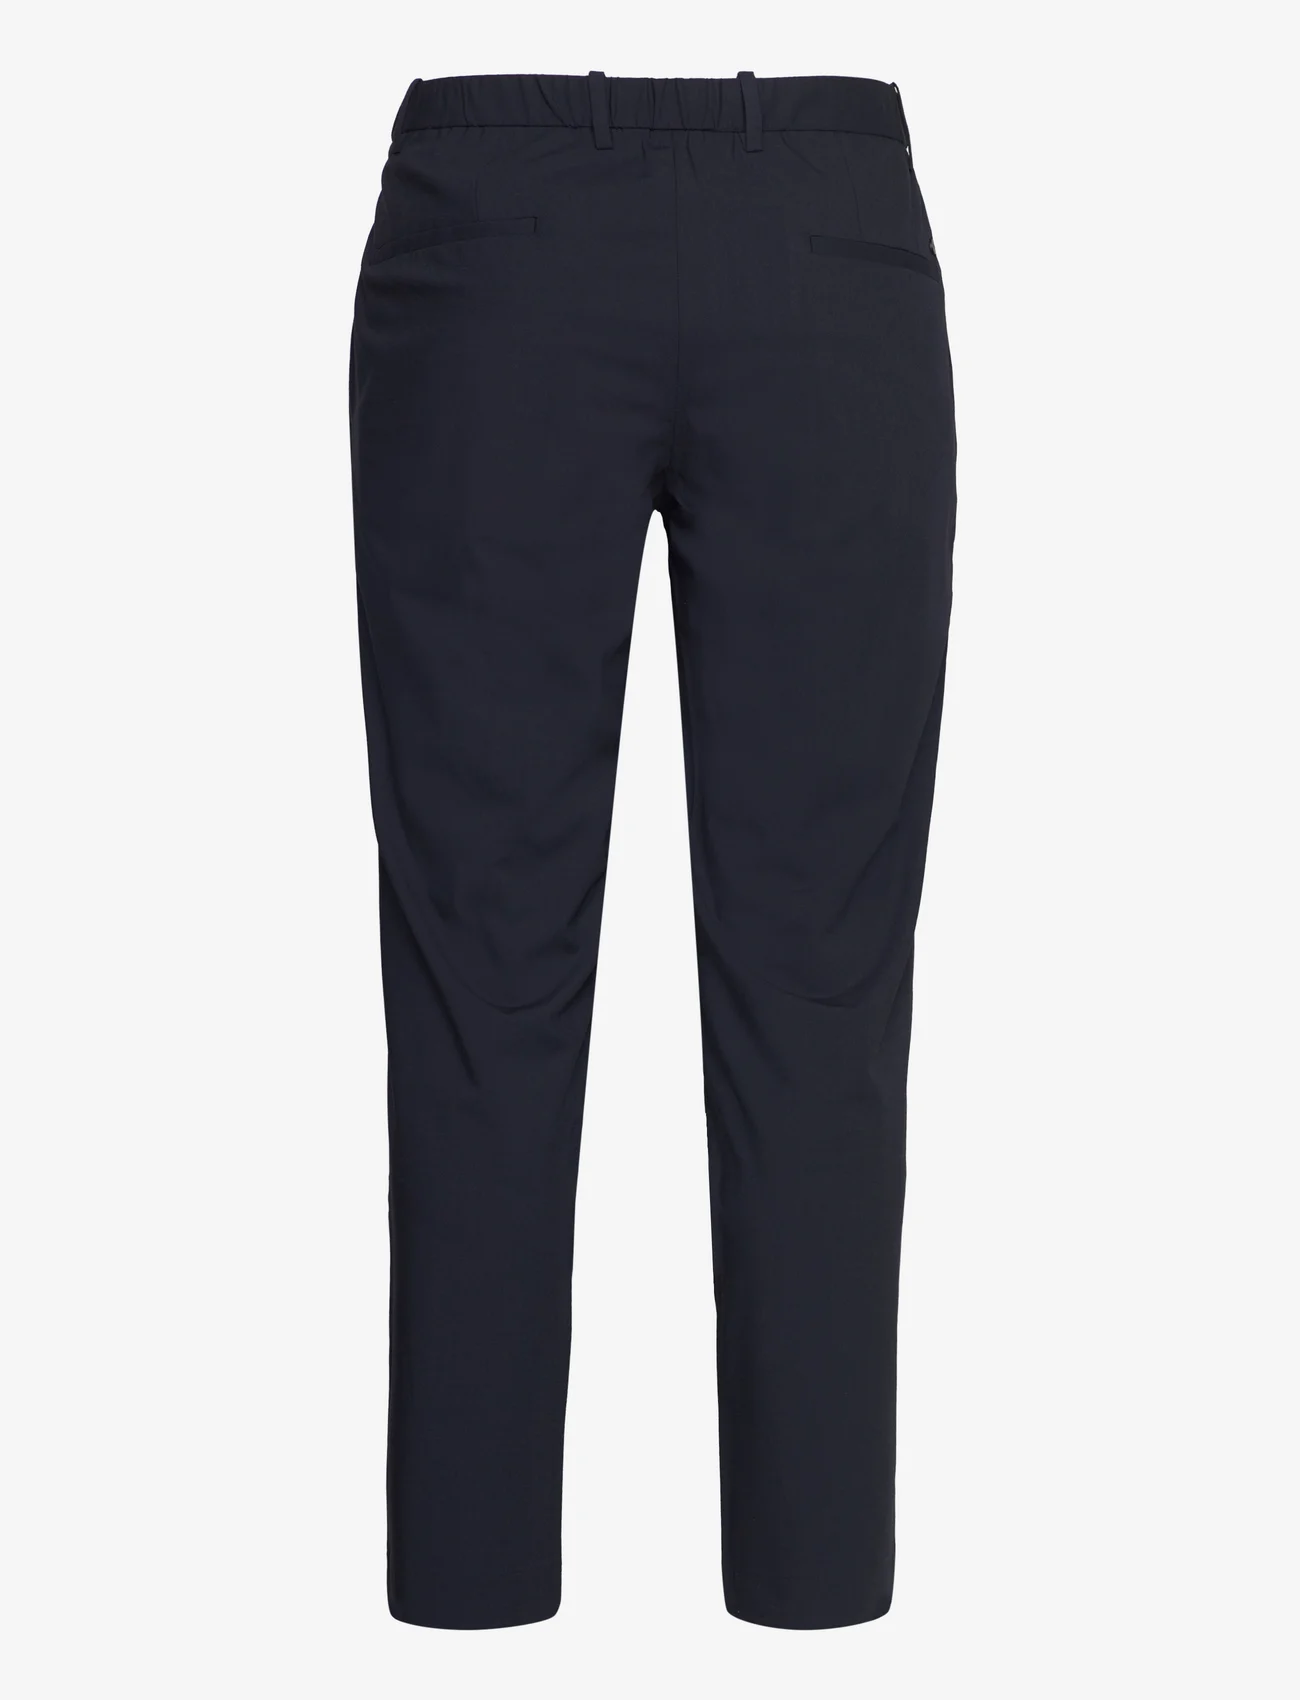 Mango - Tapered fit stretch trousers - jakkesætsbukser - navy - 1